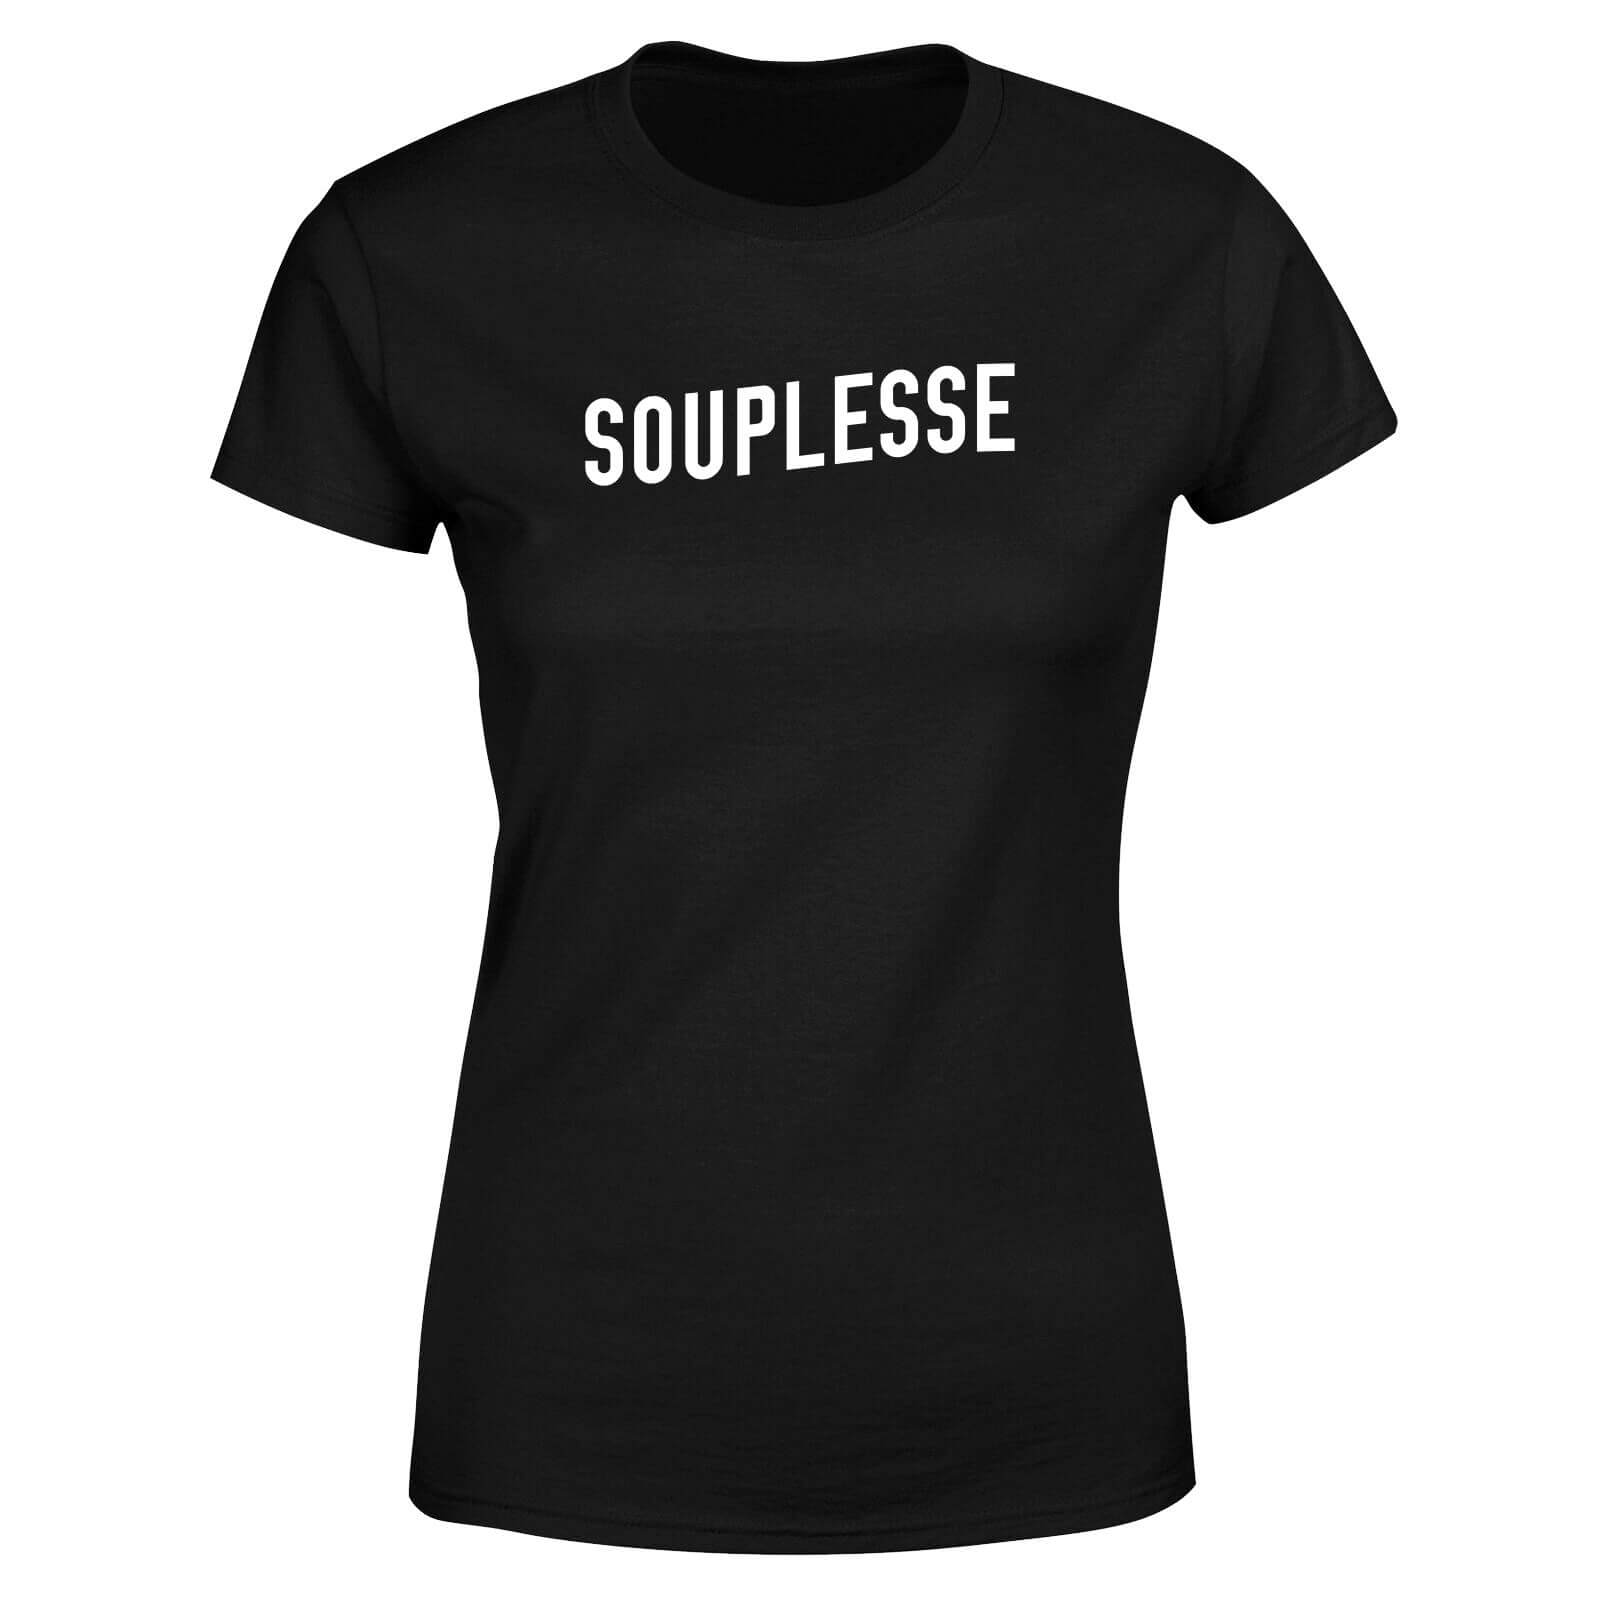 Souplesse Women's T-Shirt - Black - 4XL - Black